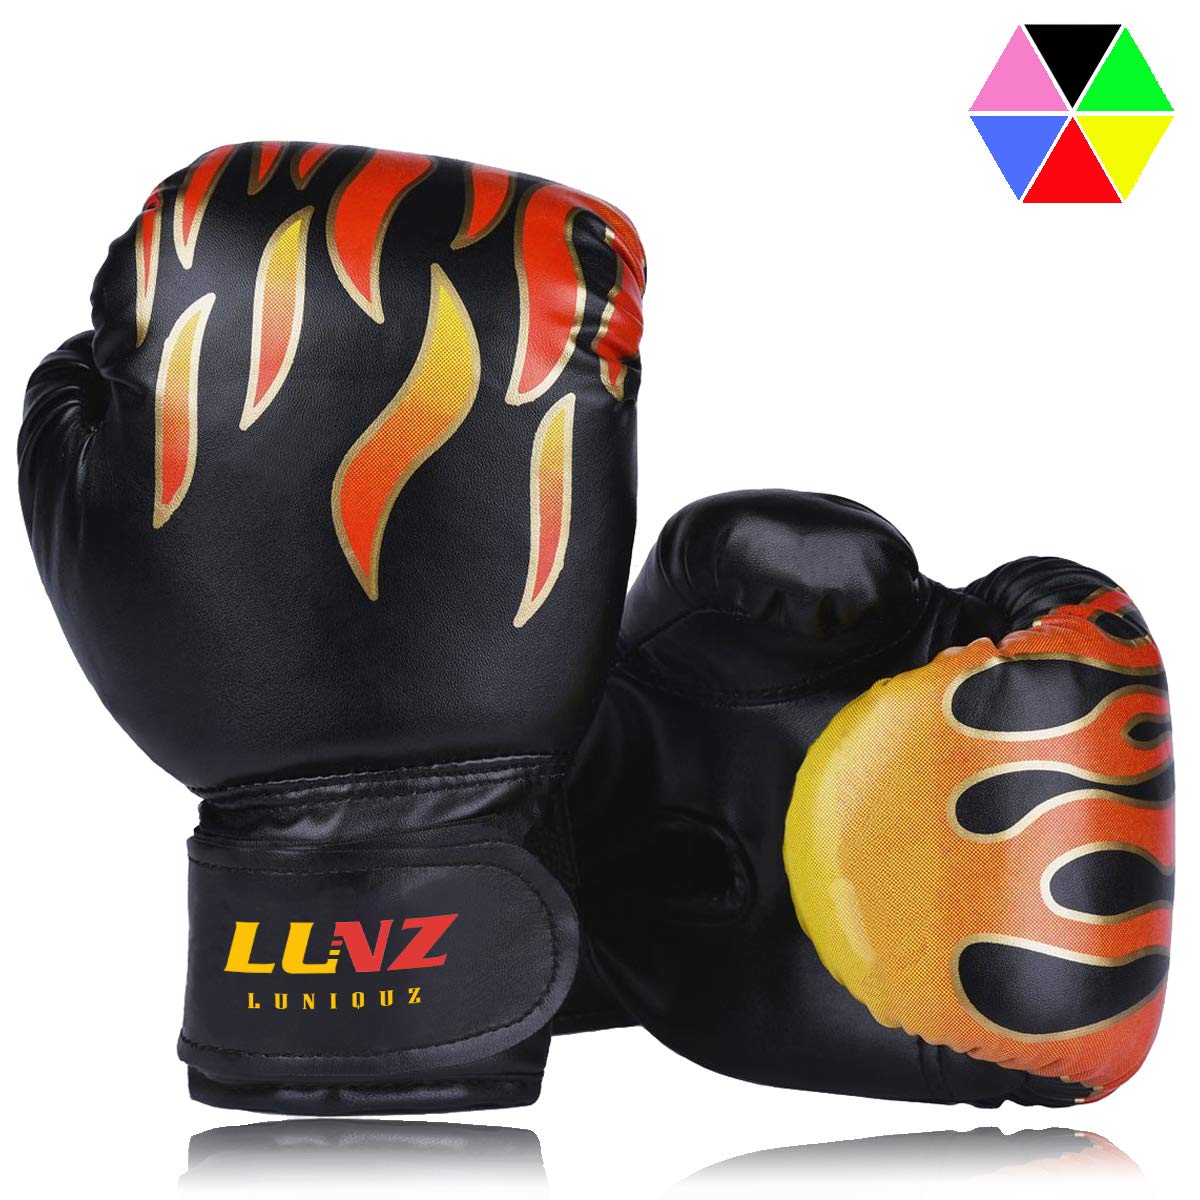 Luniquz Kids Boxing Gloves, Child Punching Gloves for Punch Bag Training